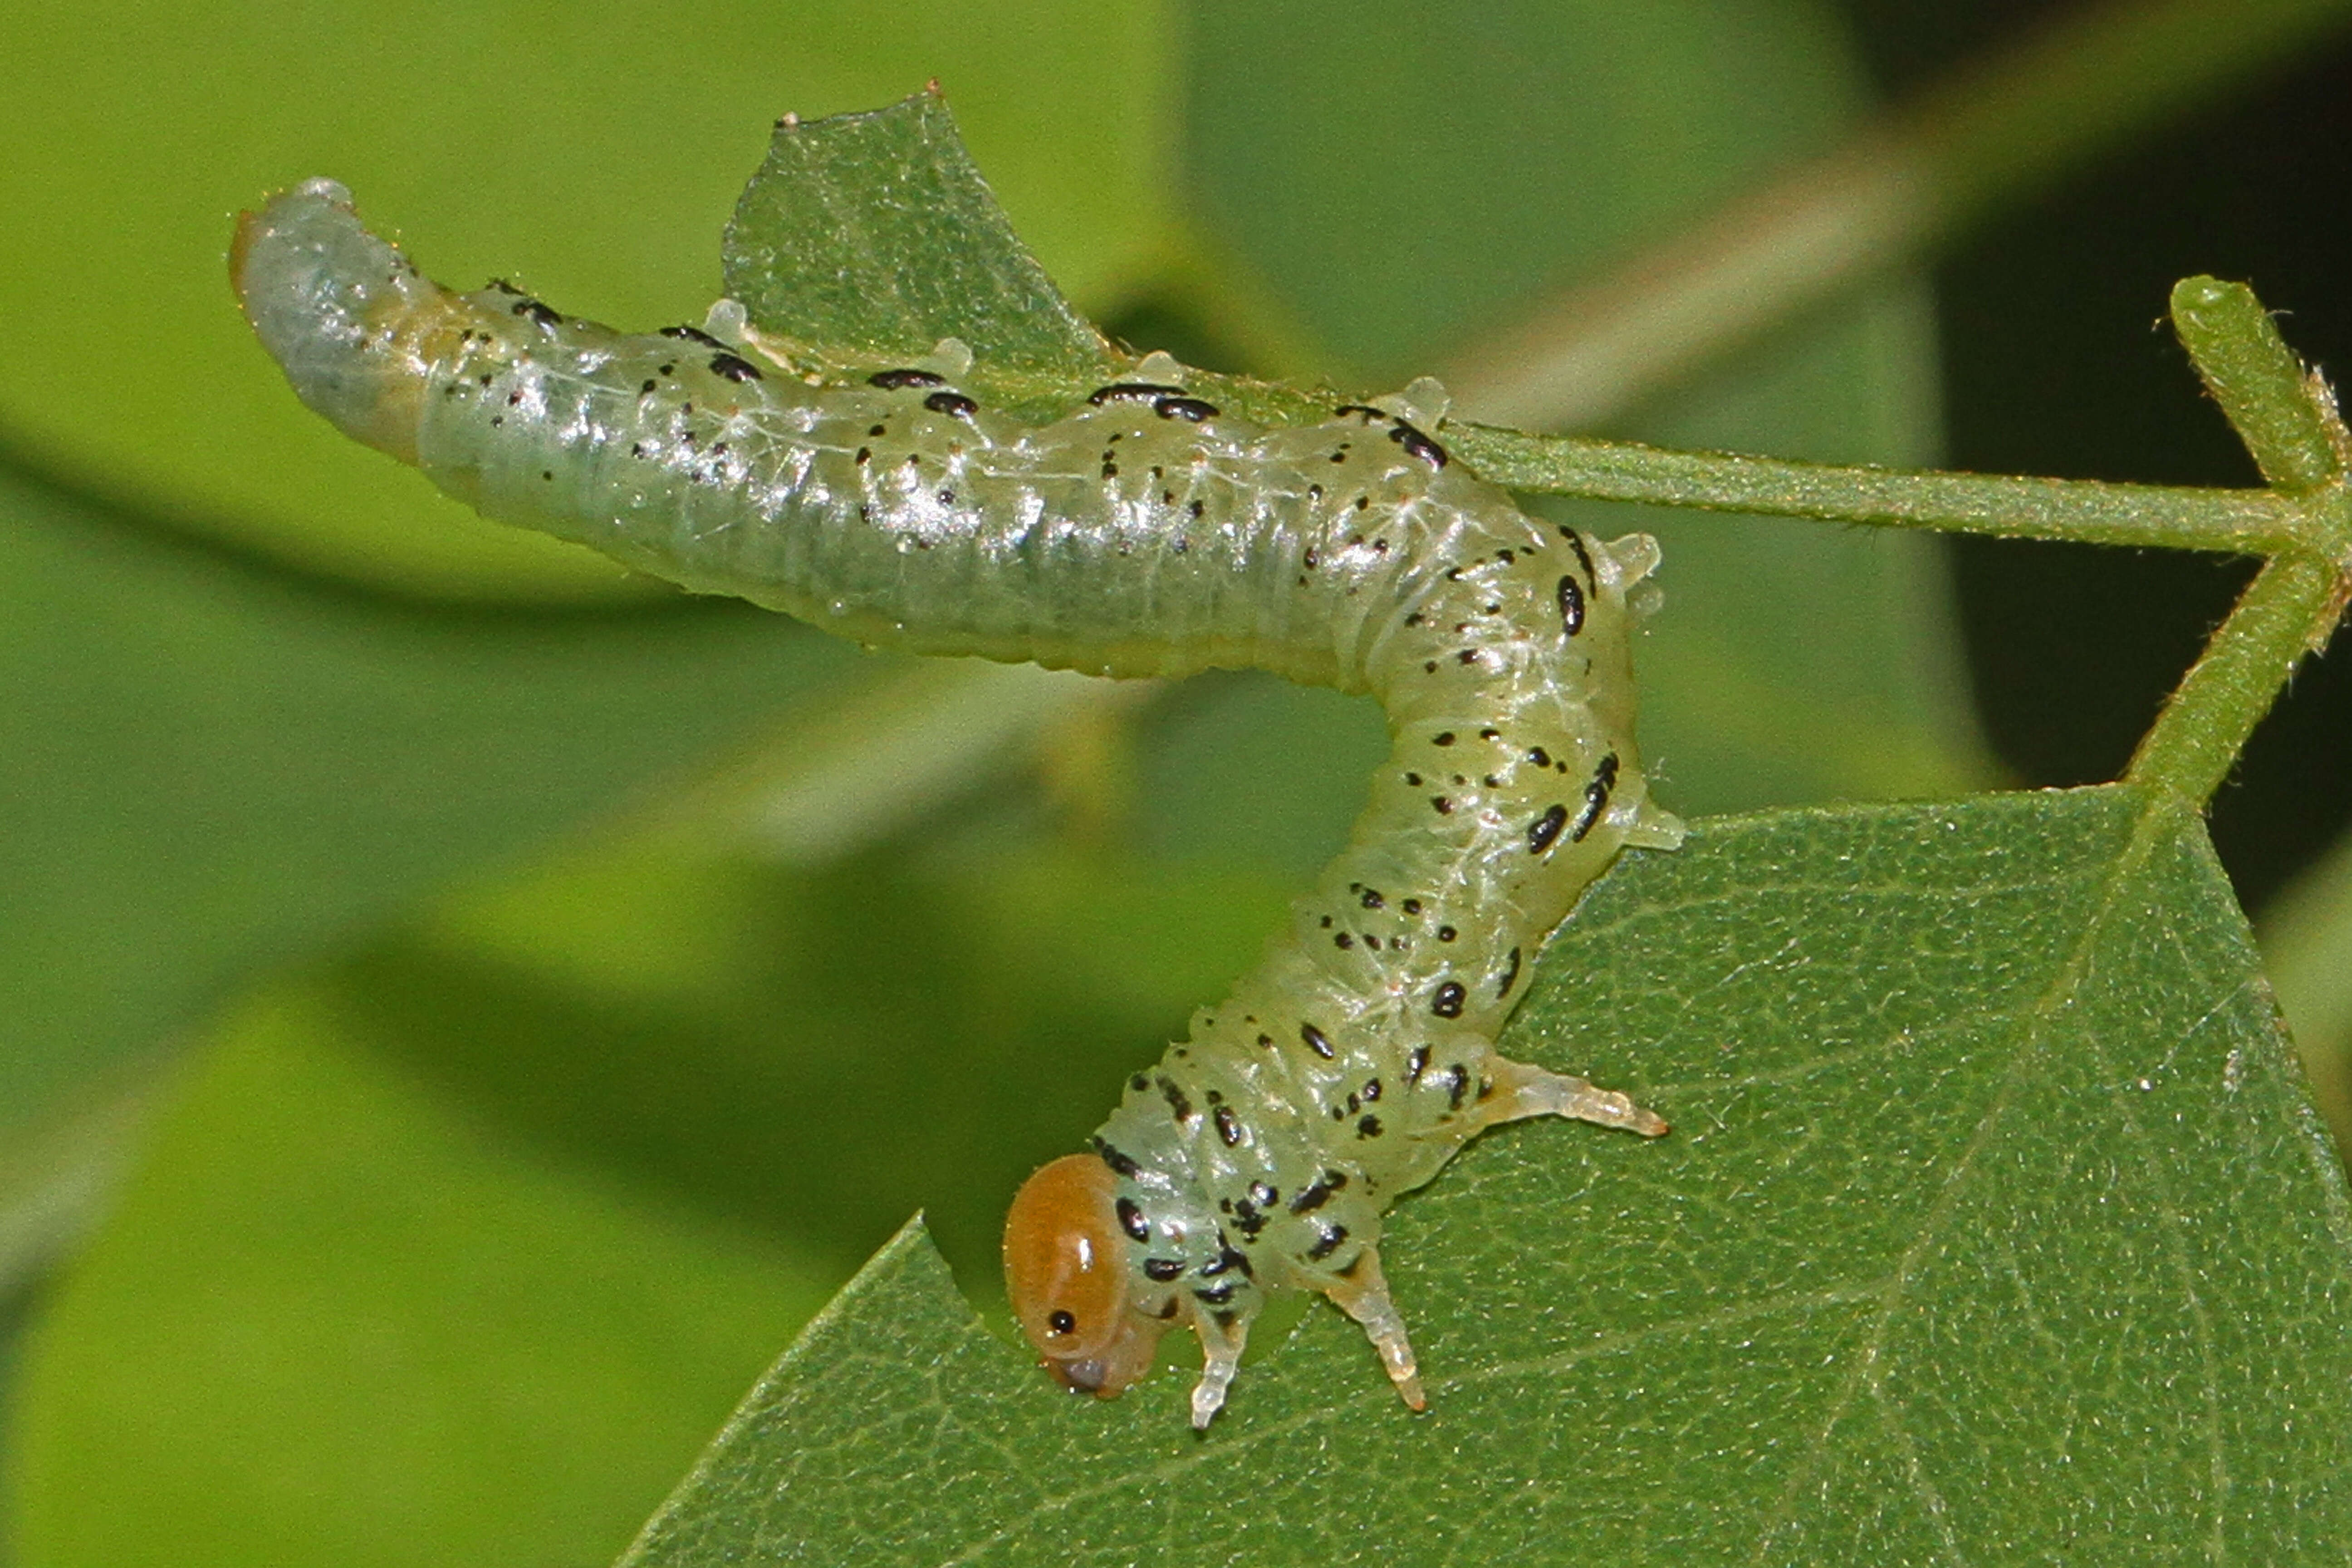 Image of Locust Sawfly